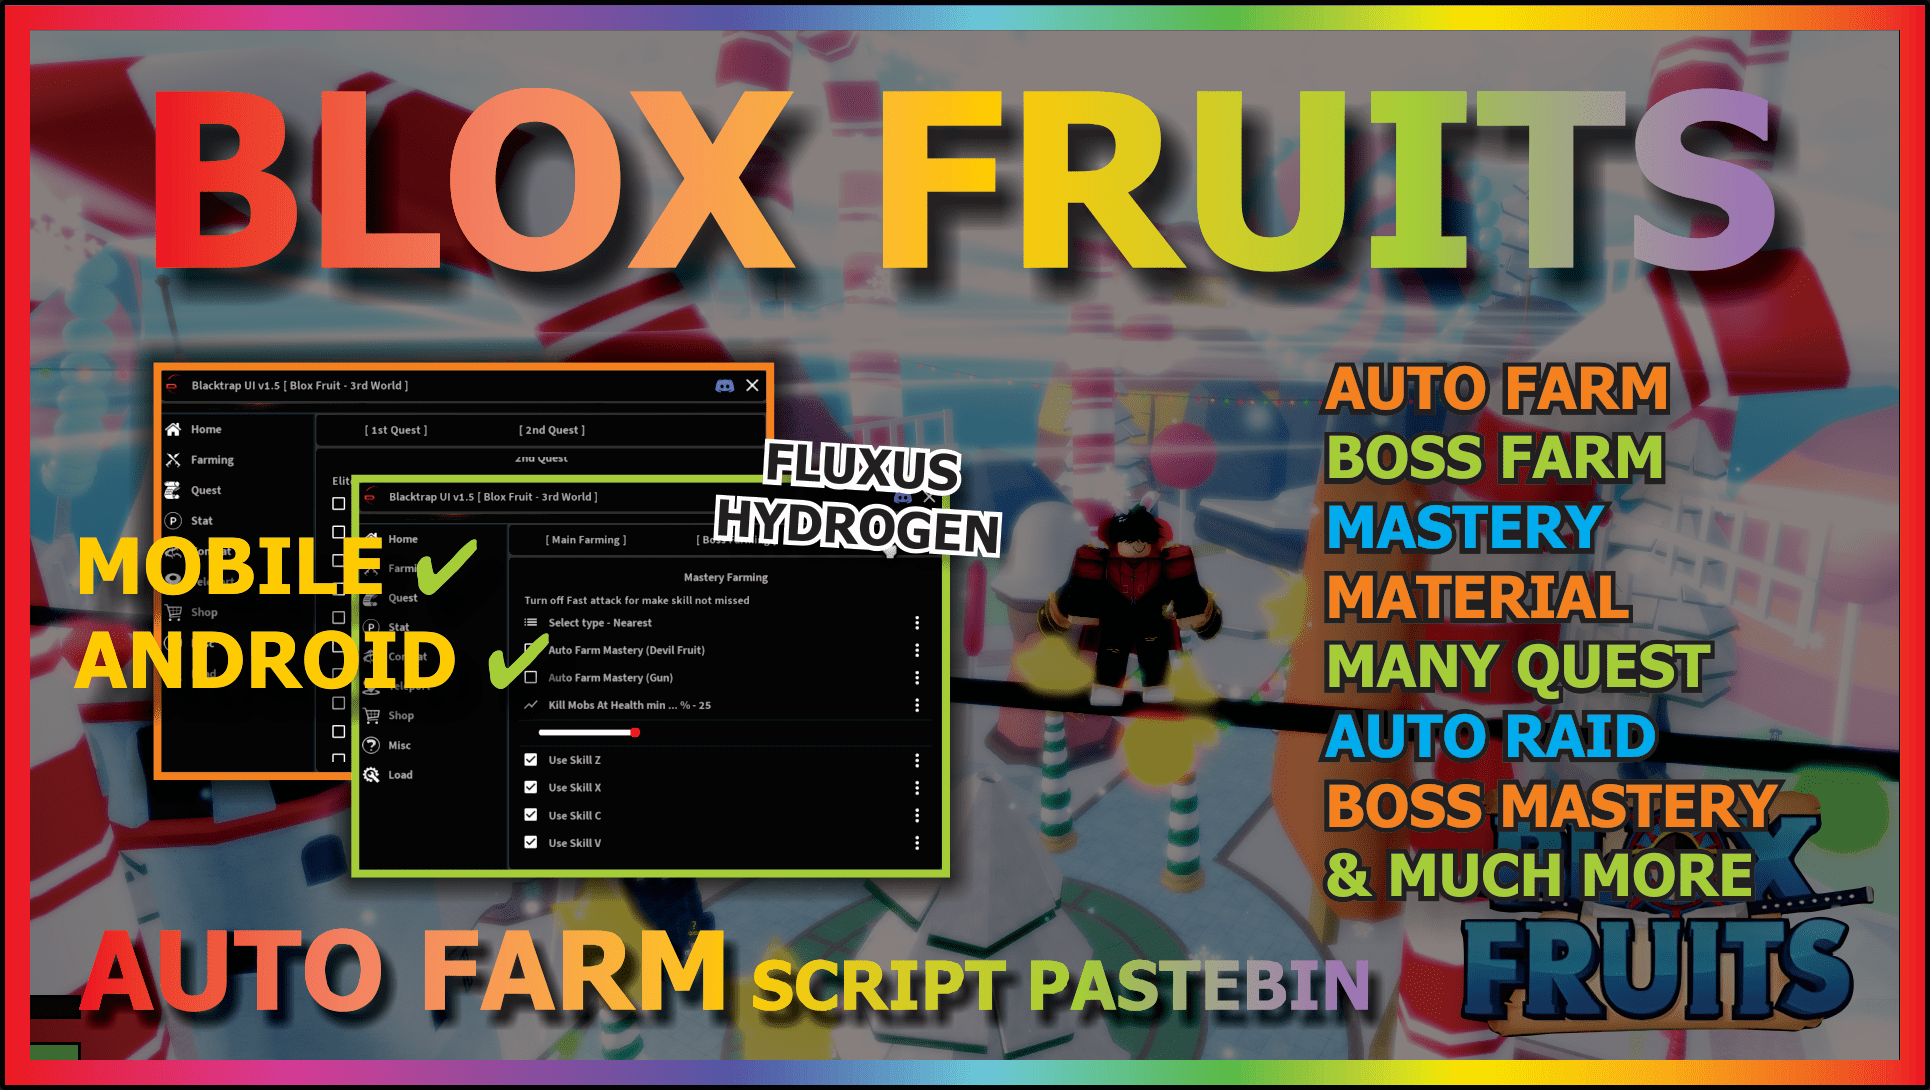 Blox Fruits: Auto Farm Level, Auto Farm Mastery, Auto Farm Bosses